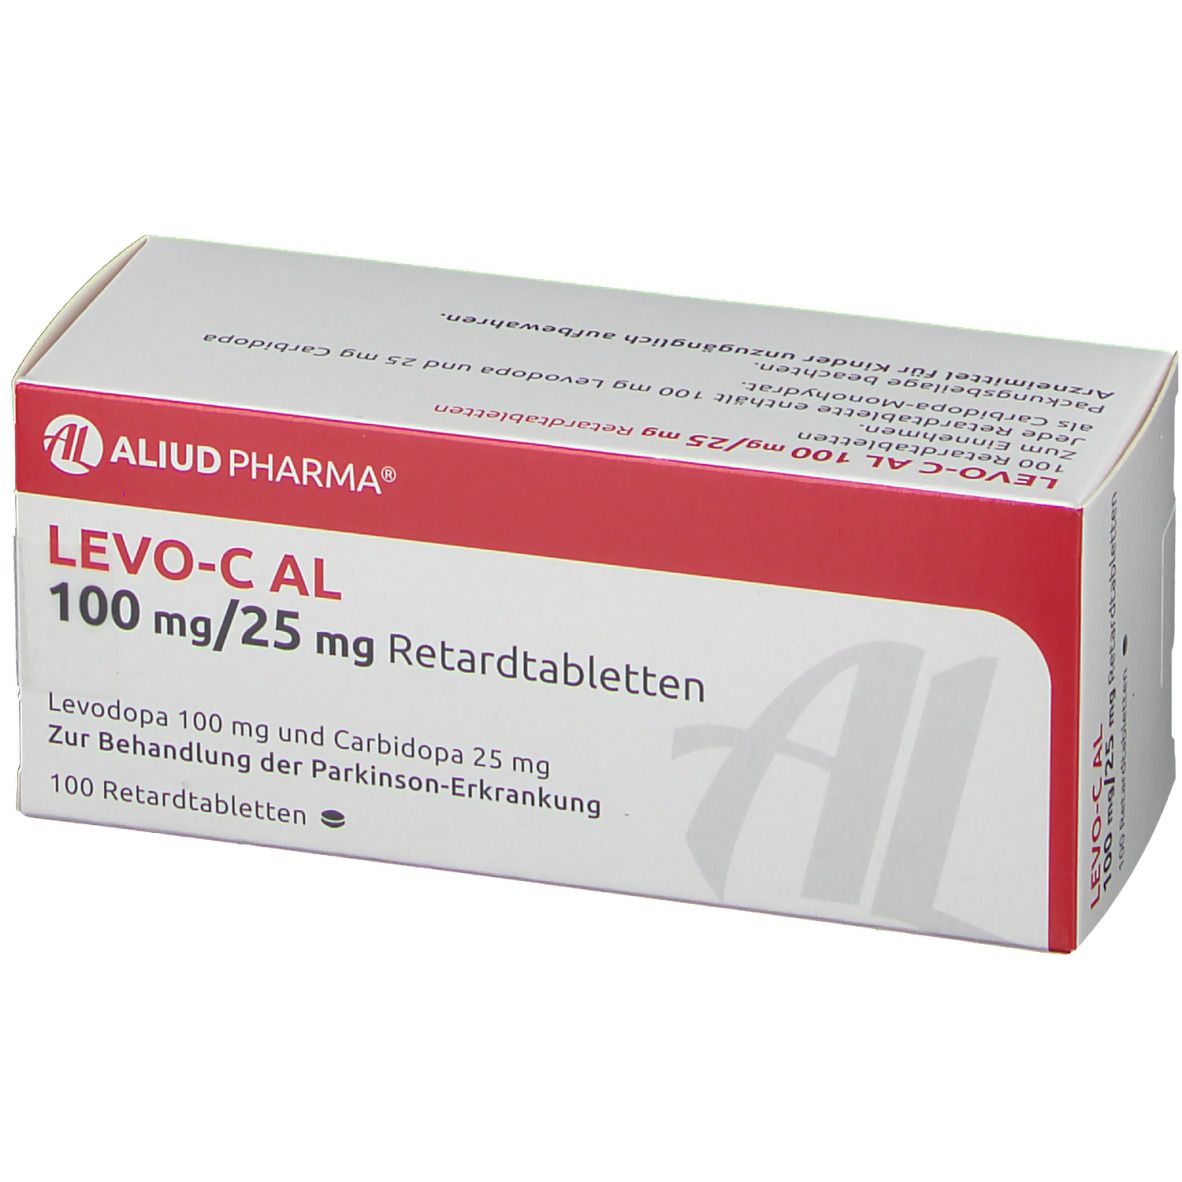 Levo-C AL 100 mg/25 mg